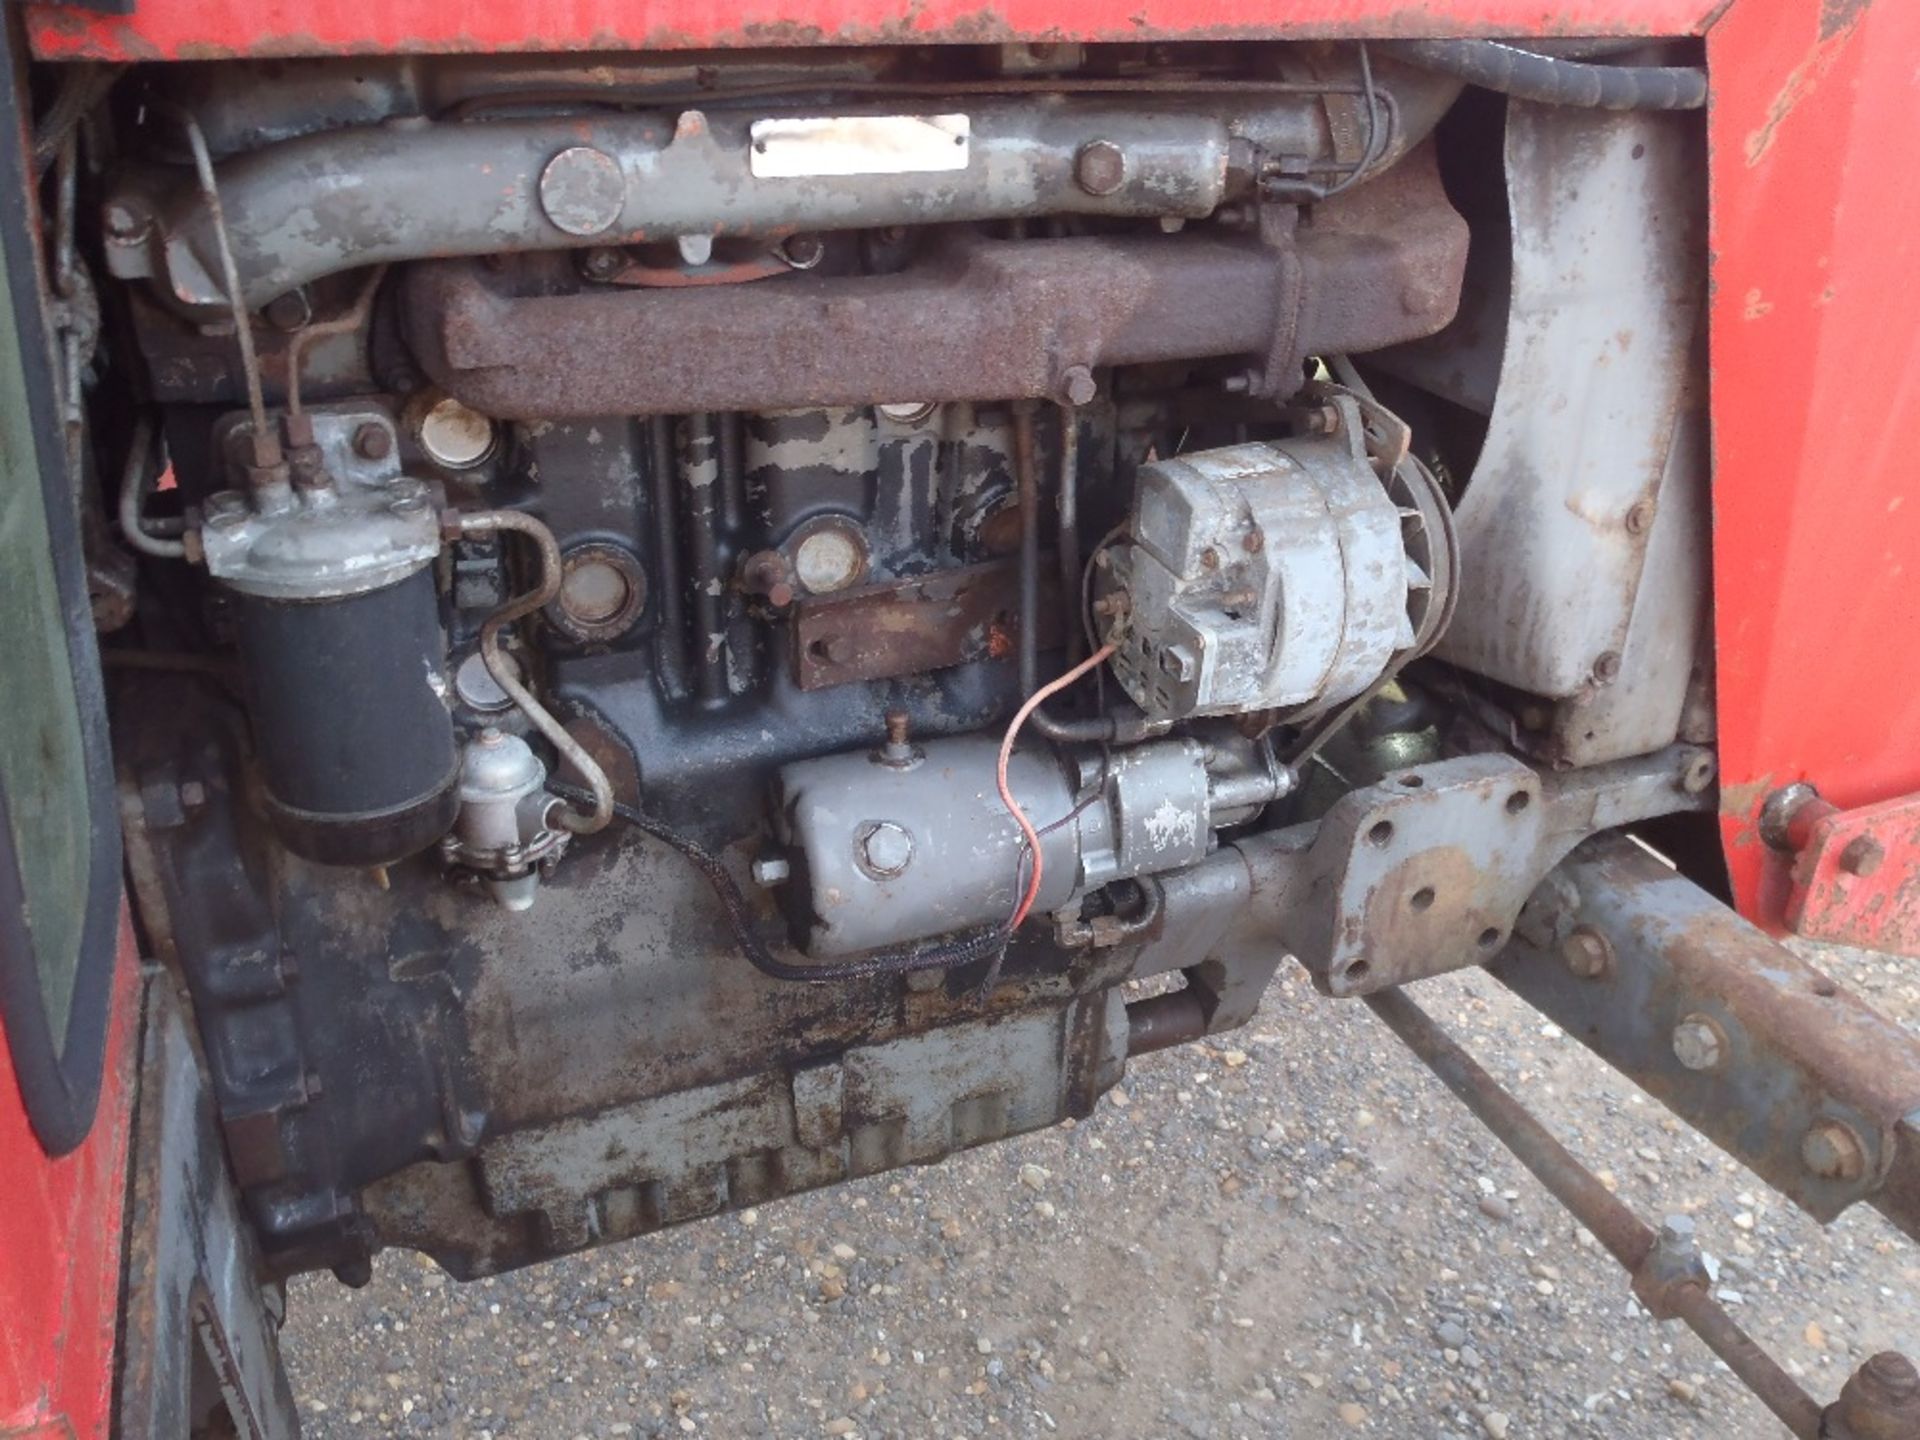 Massey Ferguson 590 2wd Tractor. Reg. No. XRS 822S Ser. No. 378142 - Image 4 of 7